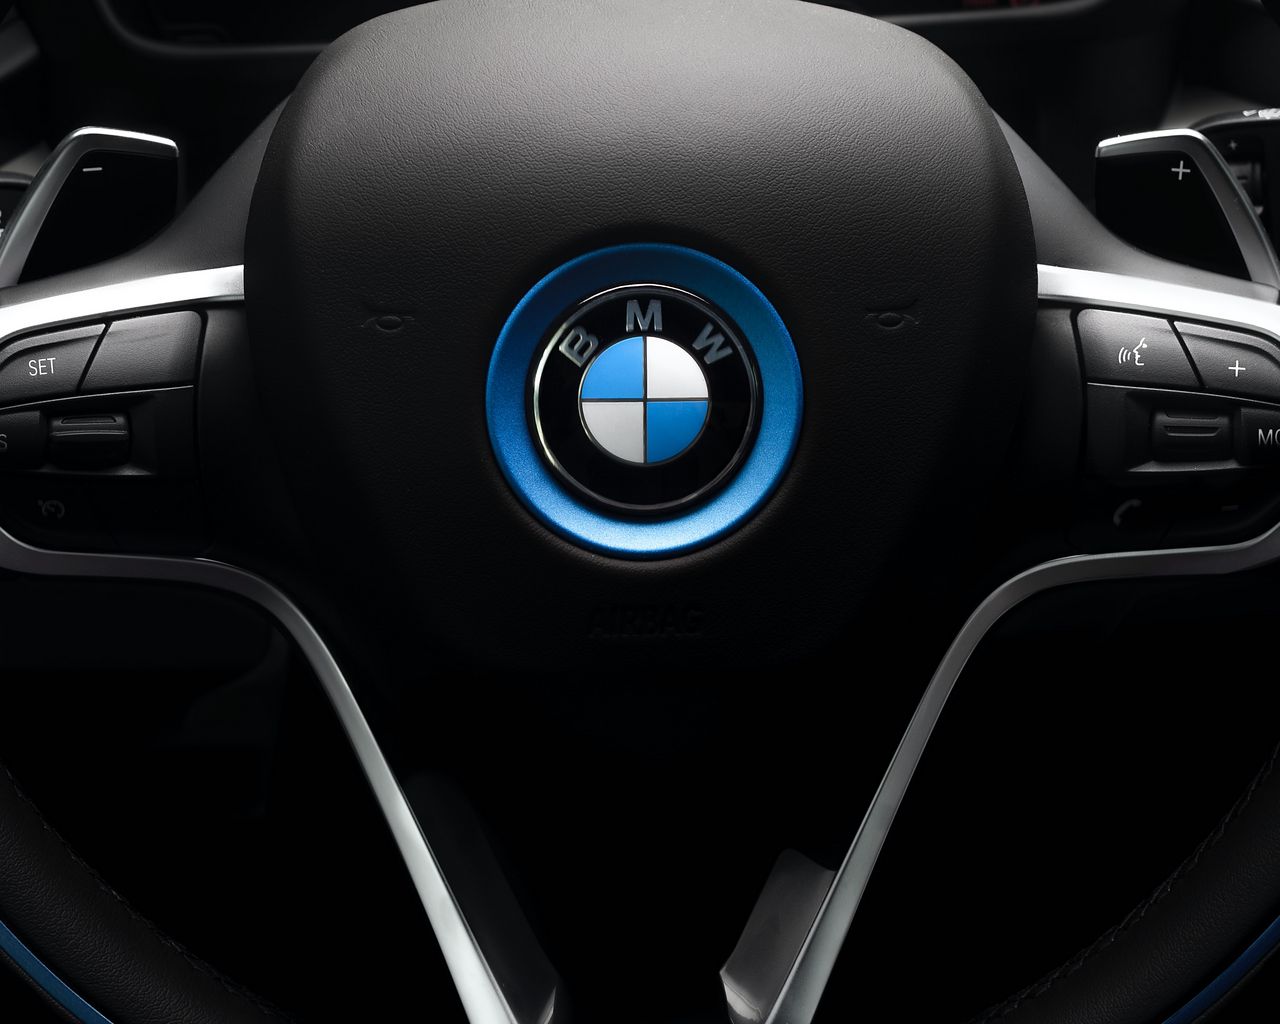 Download wallpaper 1280x1024 bmw, car, steering wheel, black, brand  standard 5:4 hd background